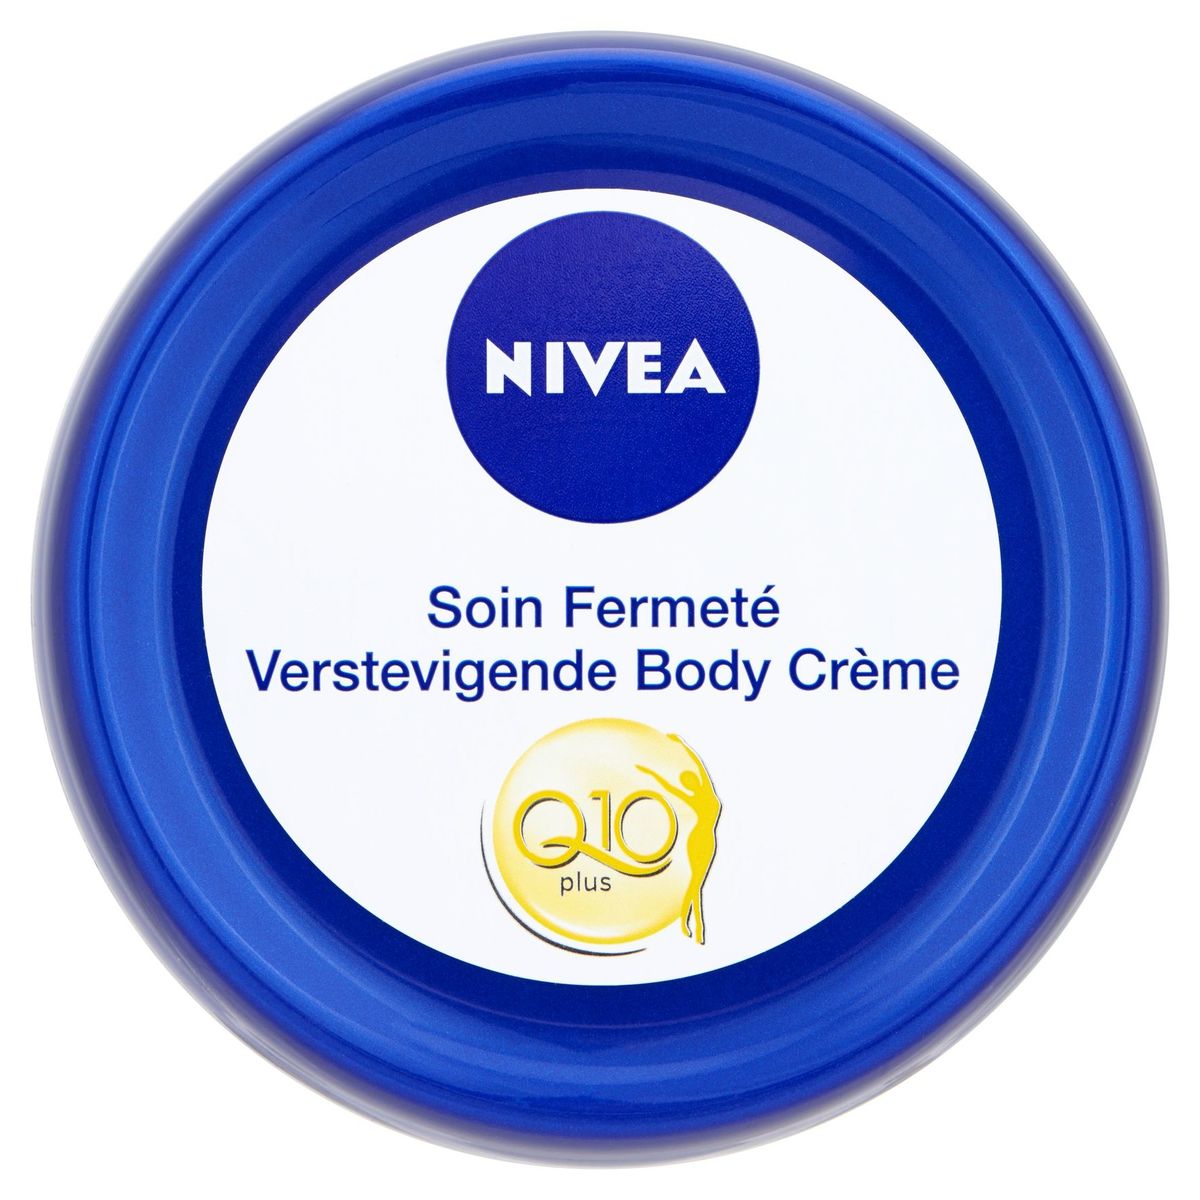 Nivea Verstevigende Body Crème Q10 Plus 300 ml